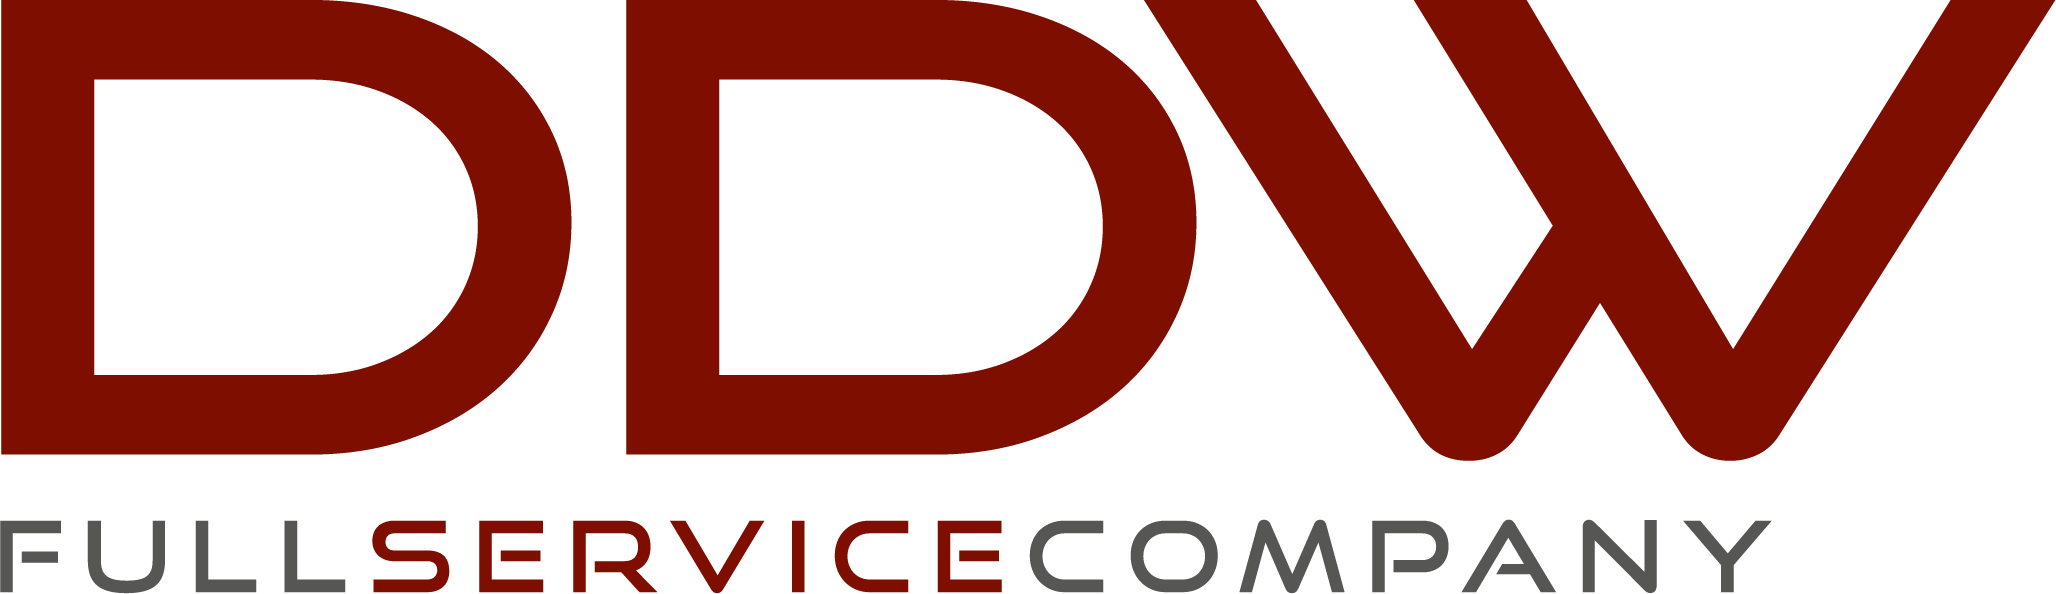 DDW Logistik - Full Service Company